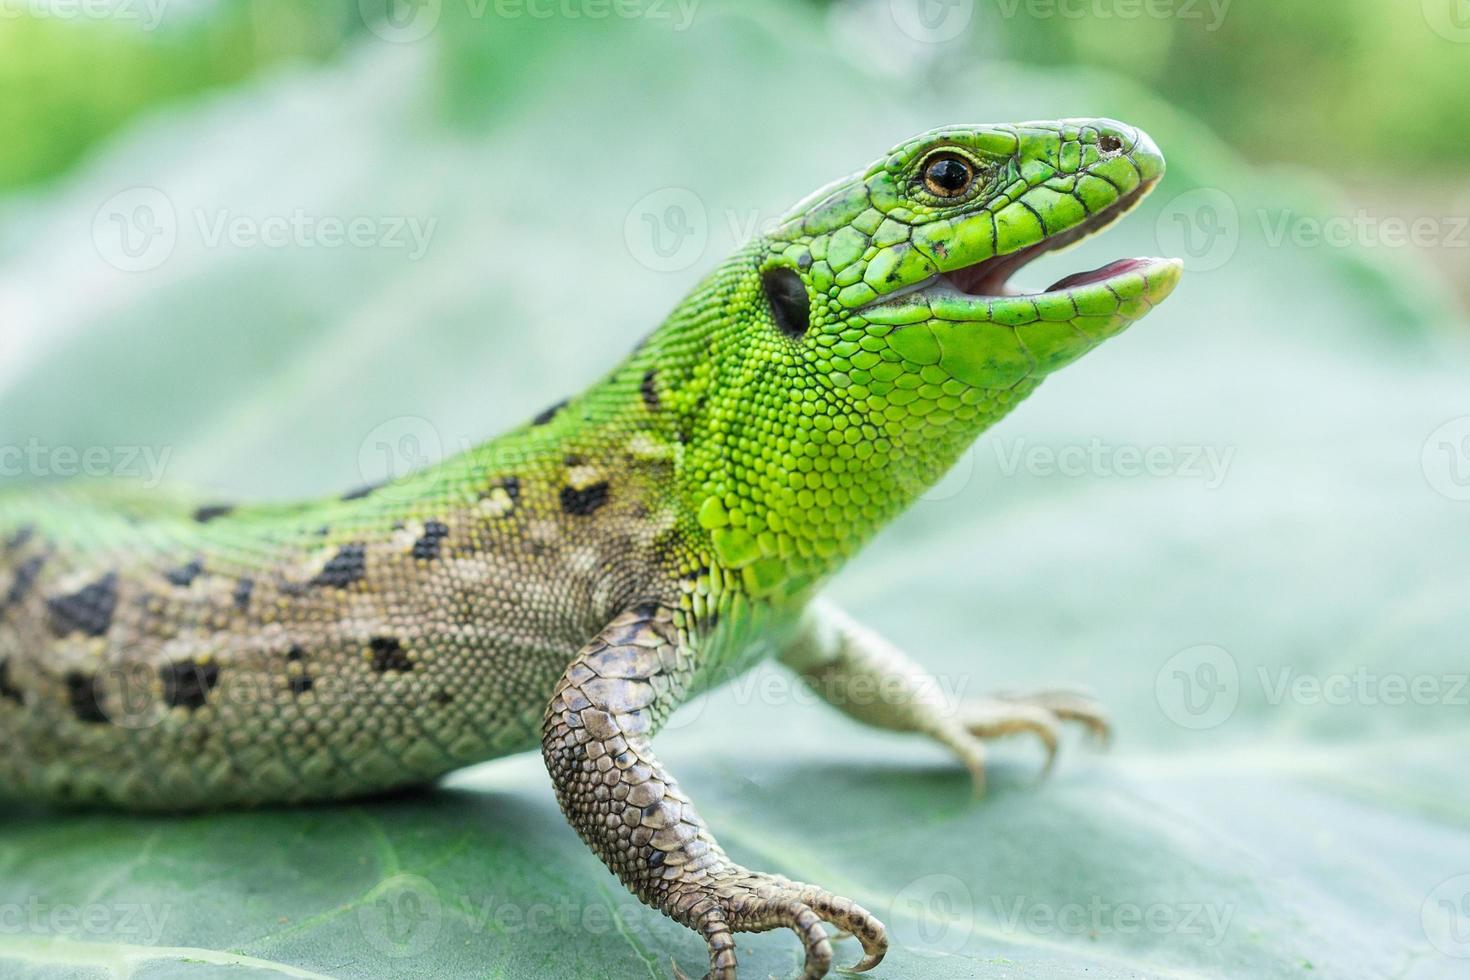 Green lizard in the grass photo